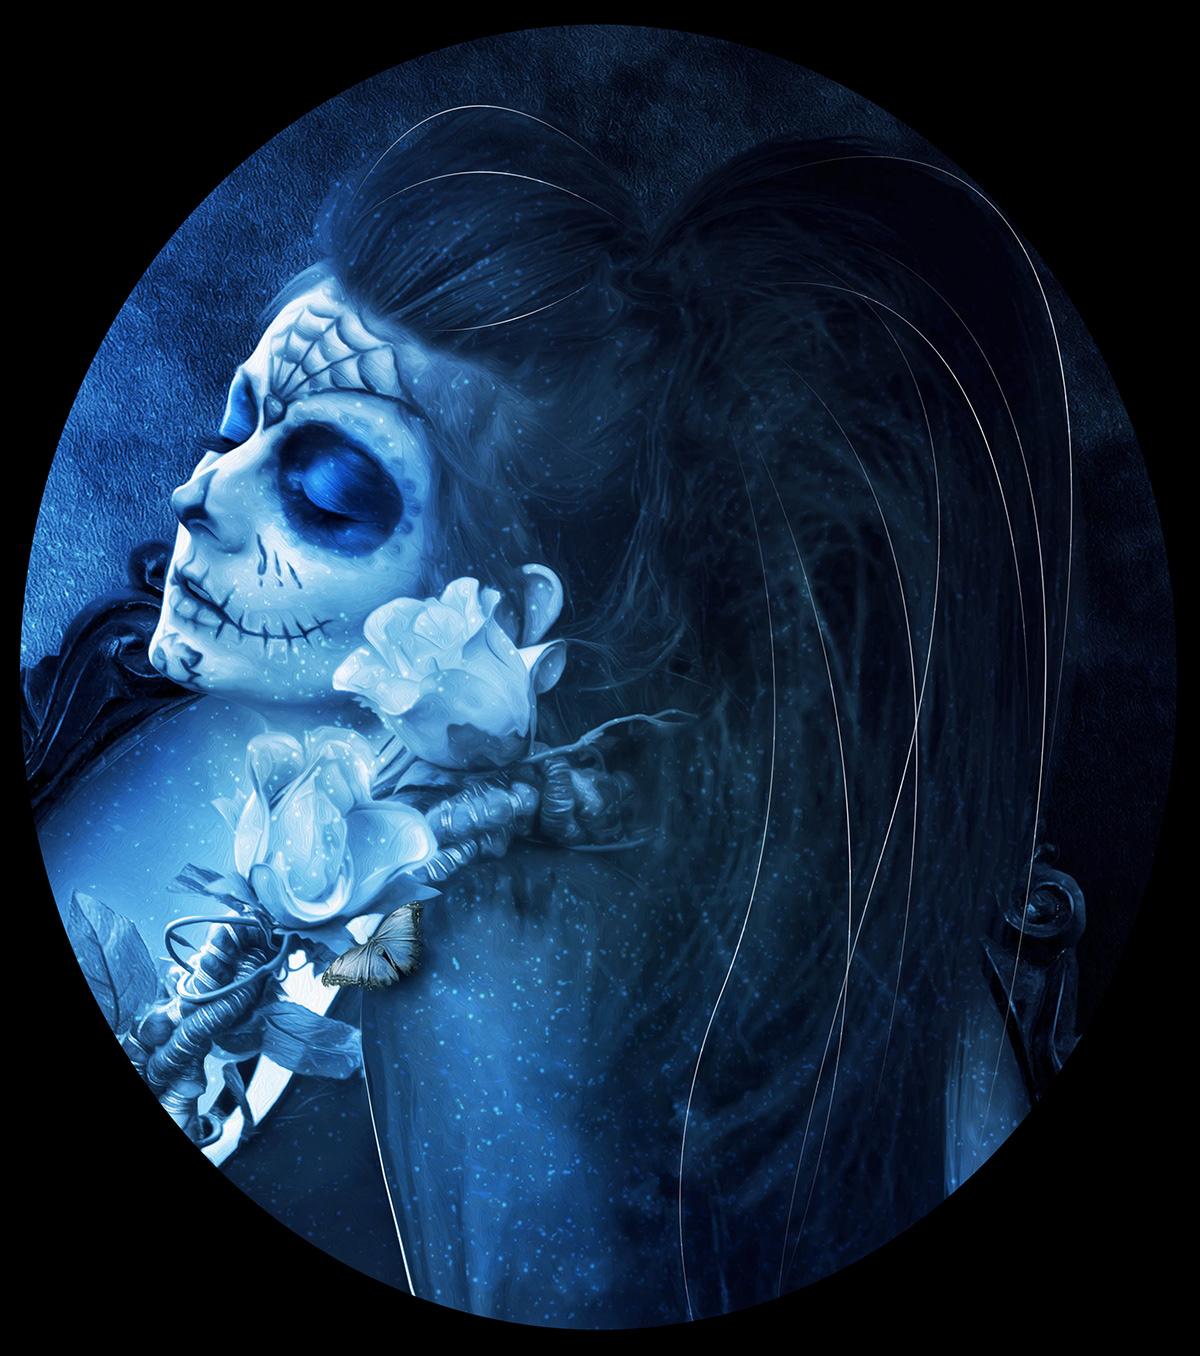 photomanipulation digital ILLUSTRATION  art Work  blue dark gothic death Melancholy calavera skull butterfly mind lost